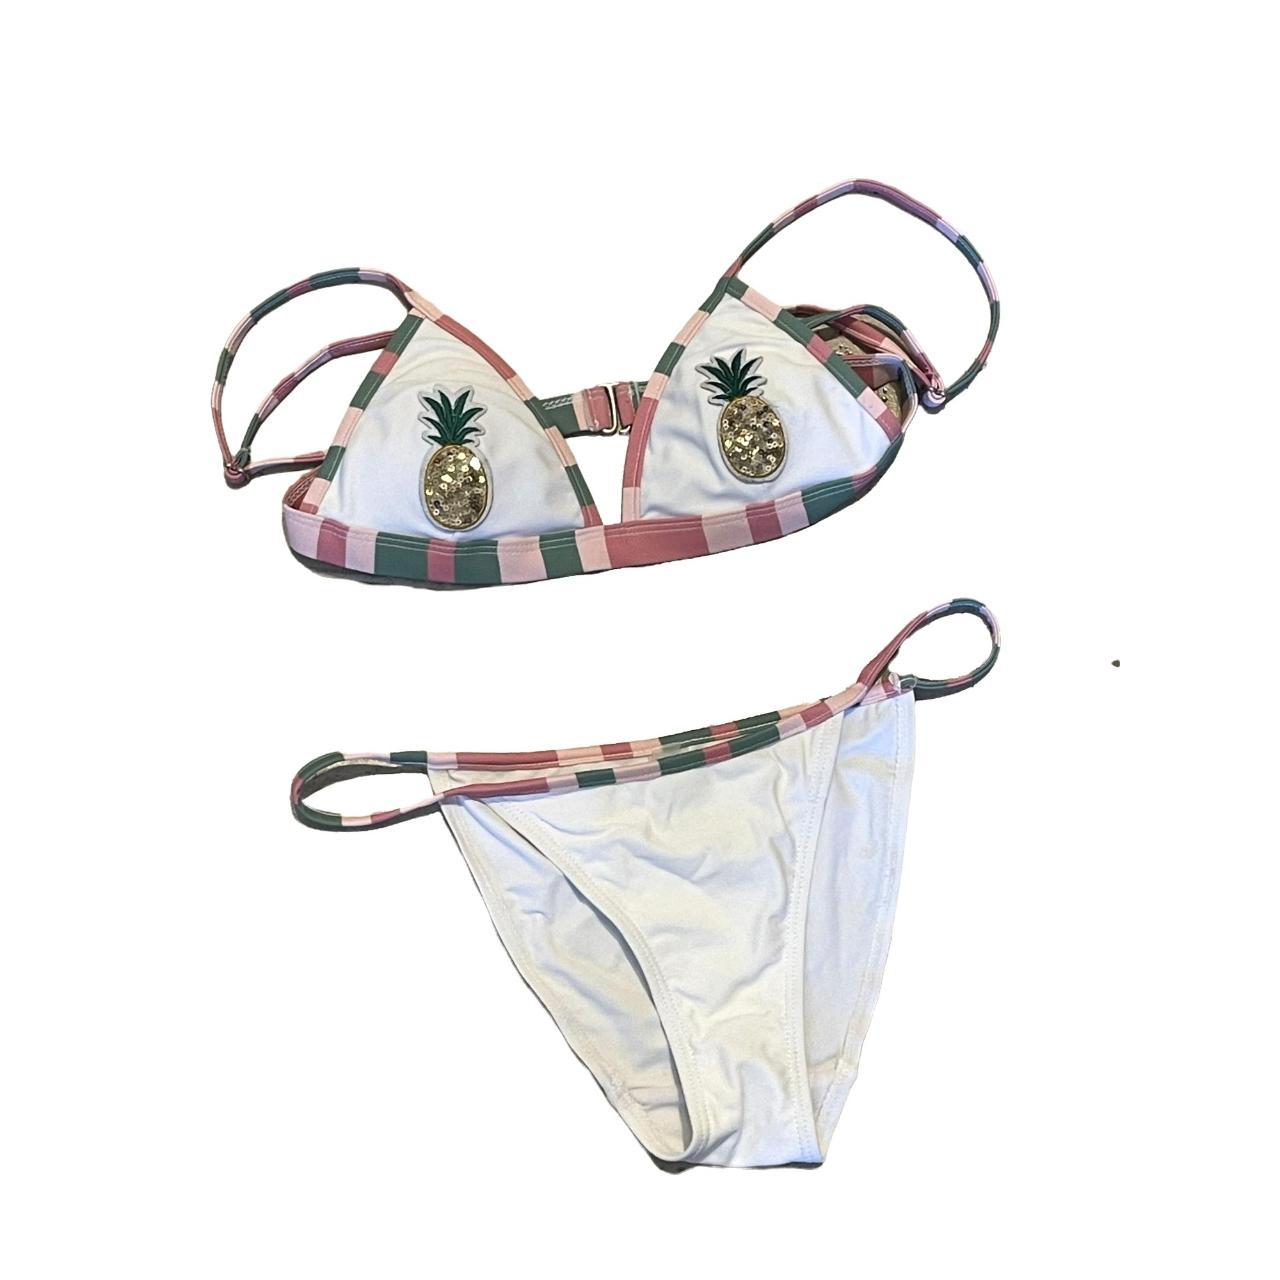 Product Image 1 - NWOT Kensie string bikini. White